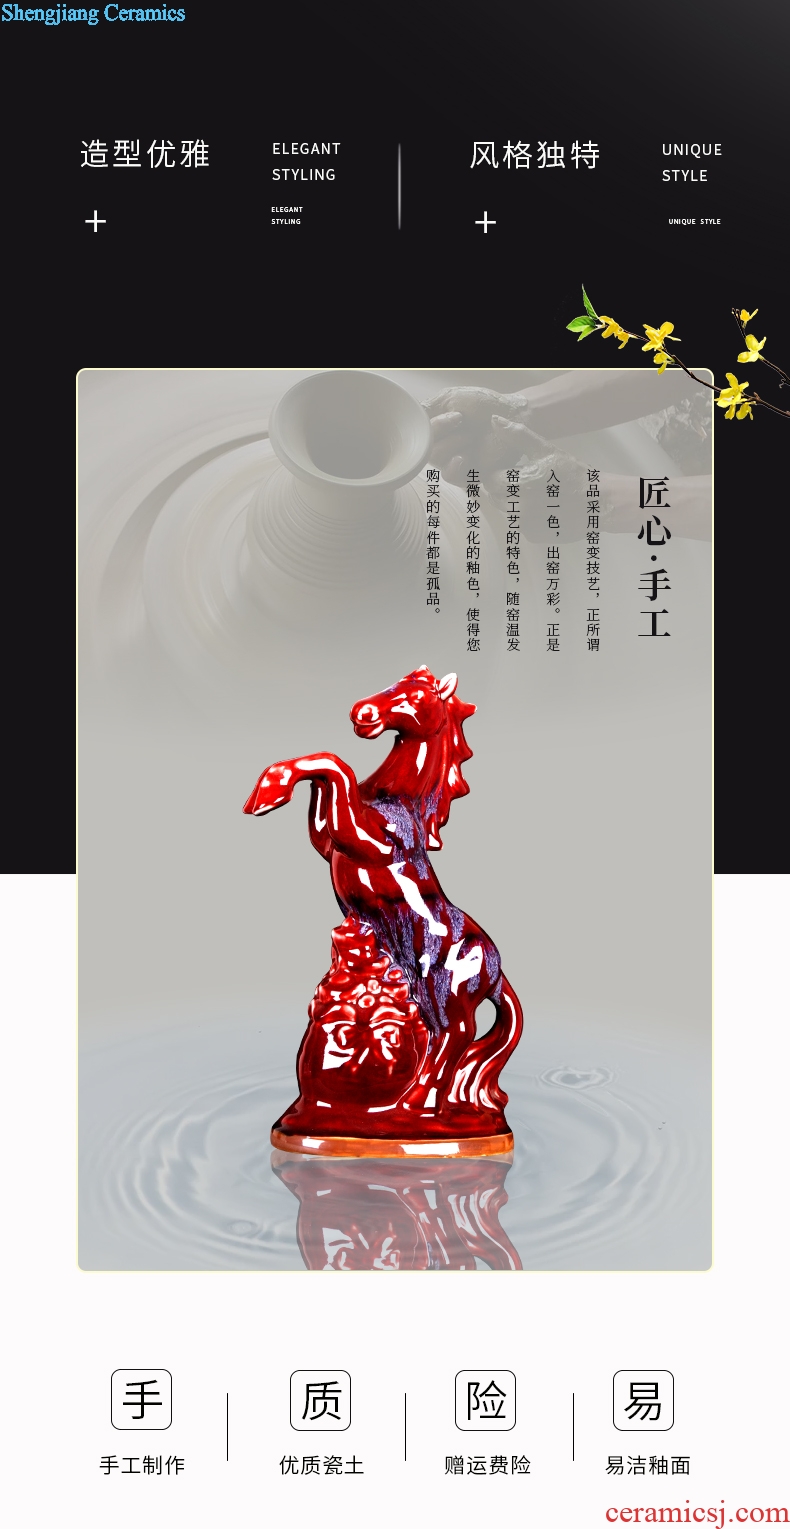 New Chinese style classical jingdezhen ceramics art horse home sitting room ark TV ark adornment handicraft furnishing articles